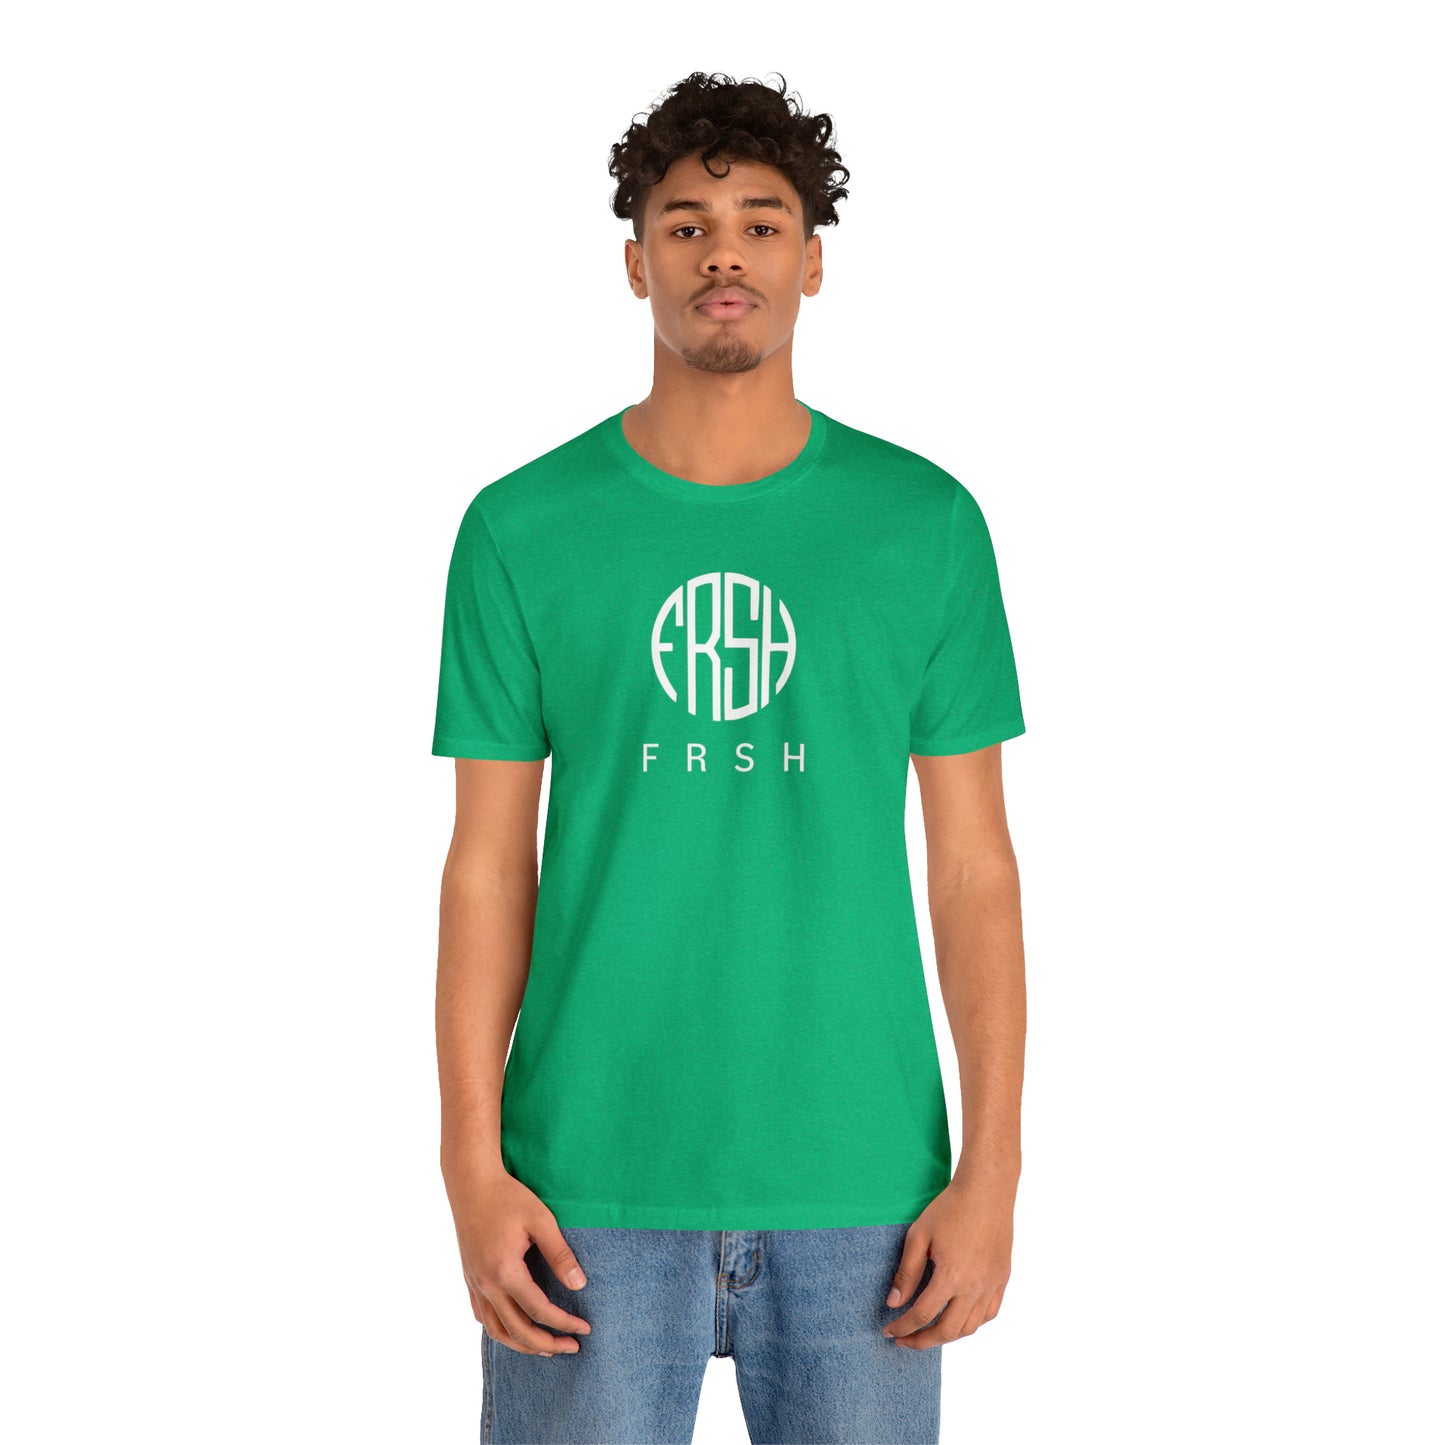 Superman Center Logo T-Shirt | FRSH Collection